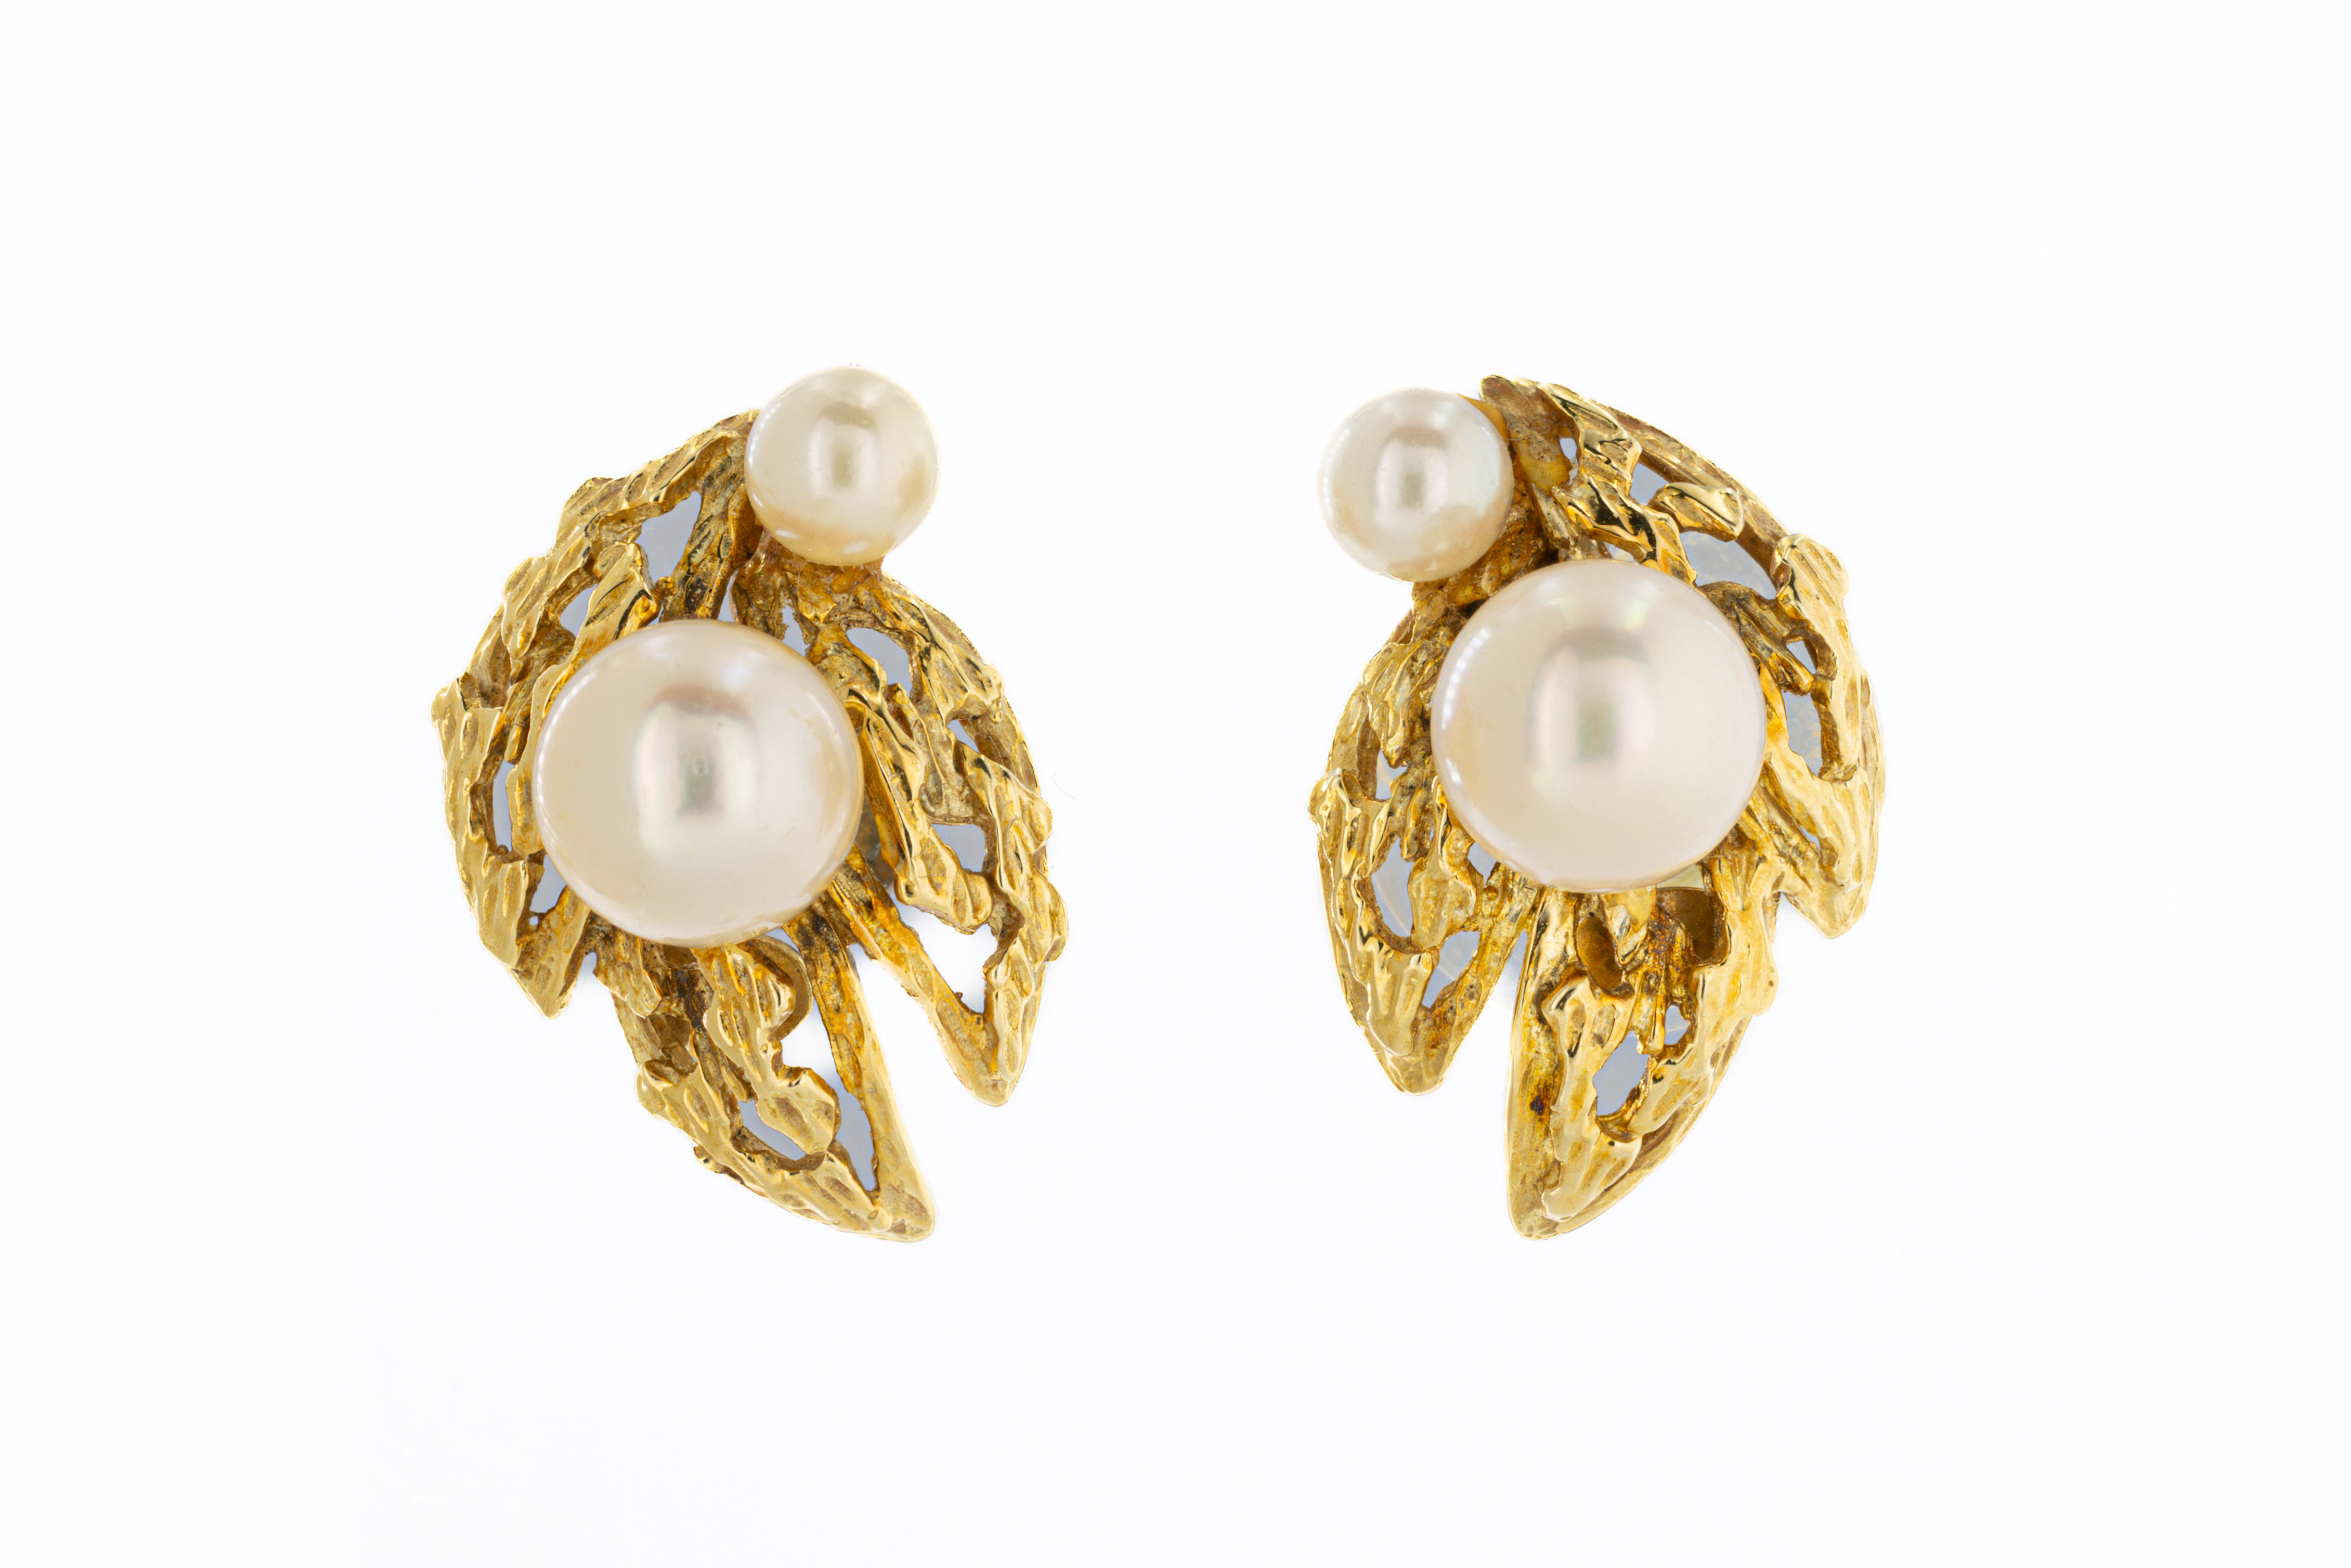 A pair of pearl gold leaf earrings